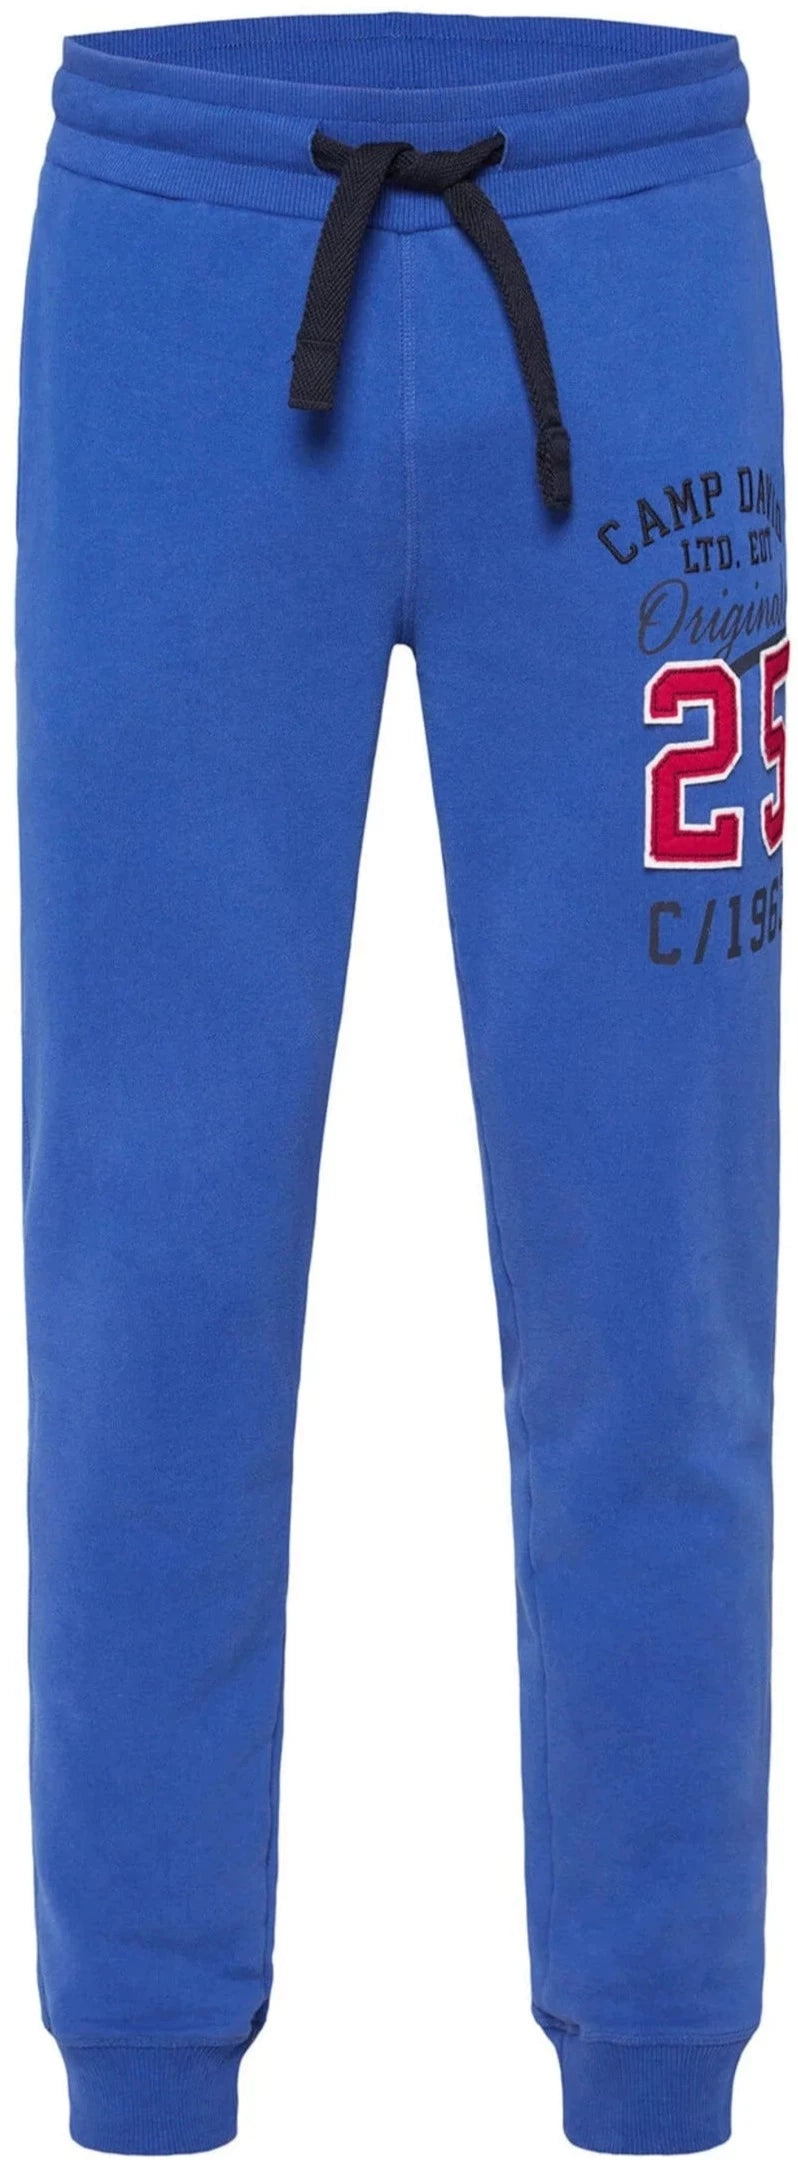 Camp David Jogging pants with retro artwork, blue